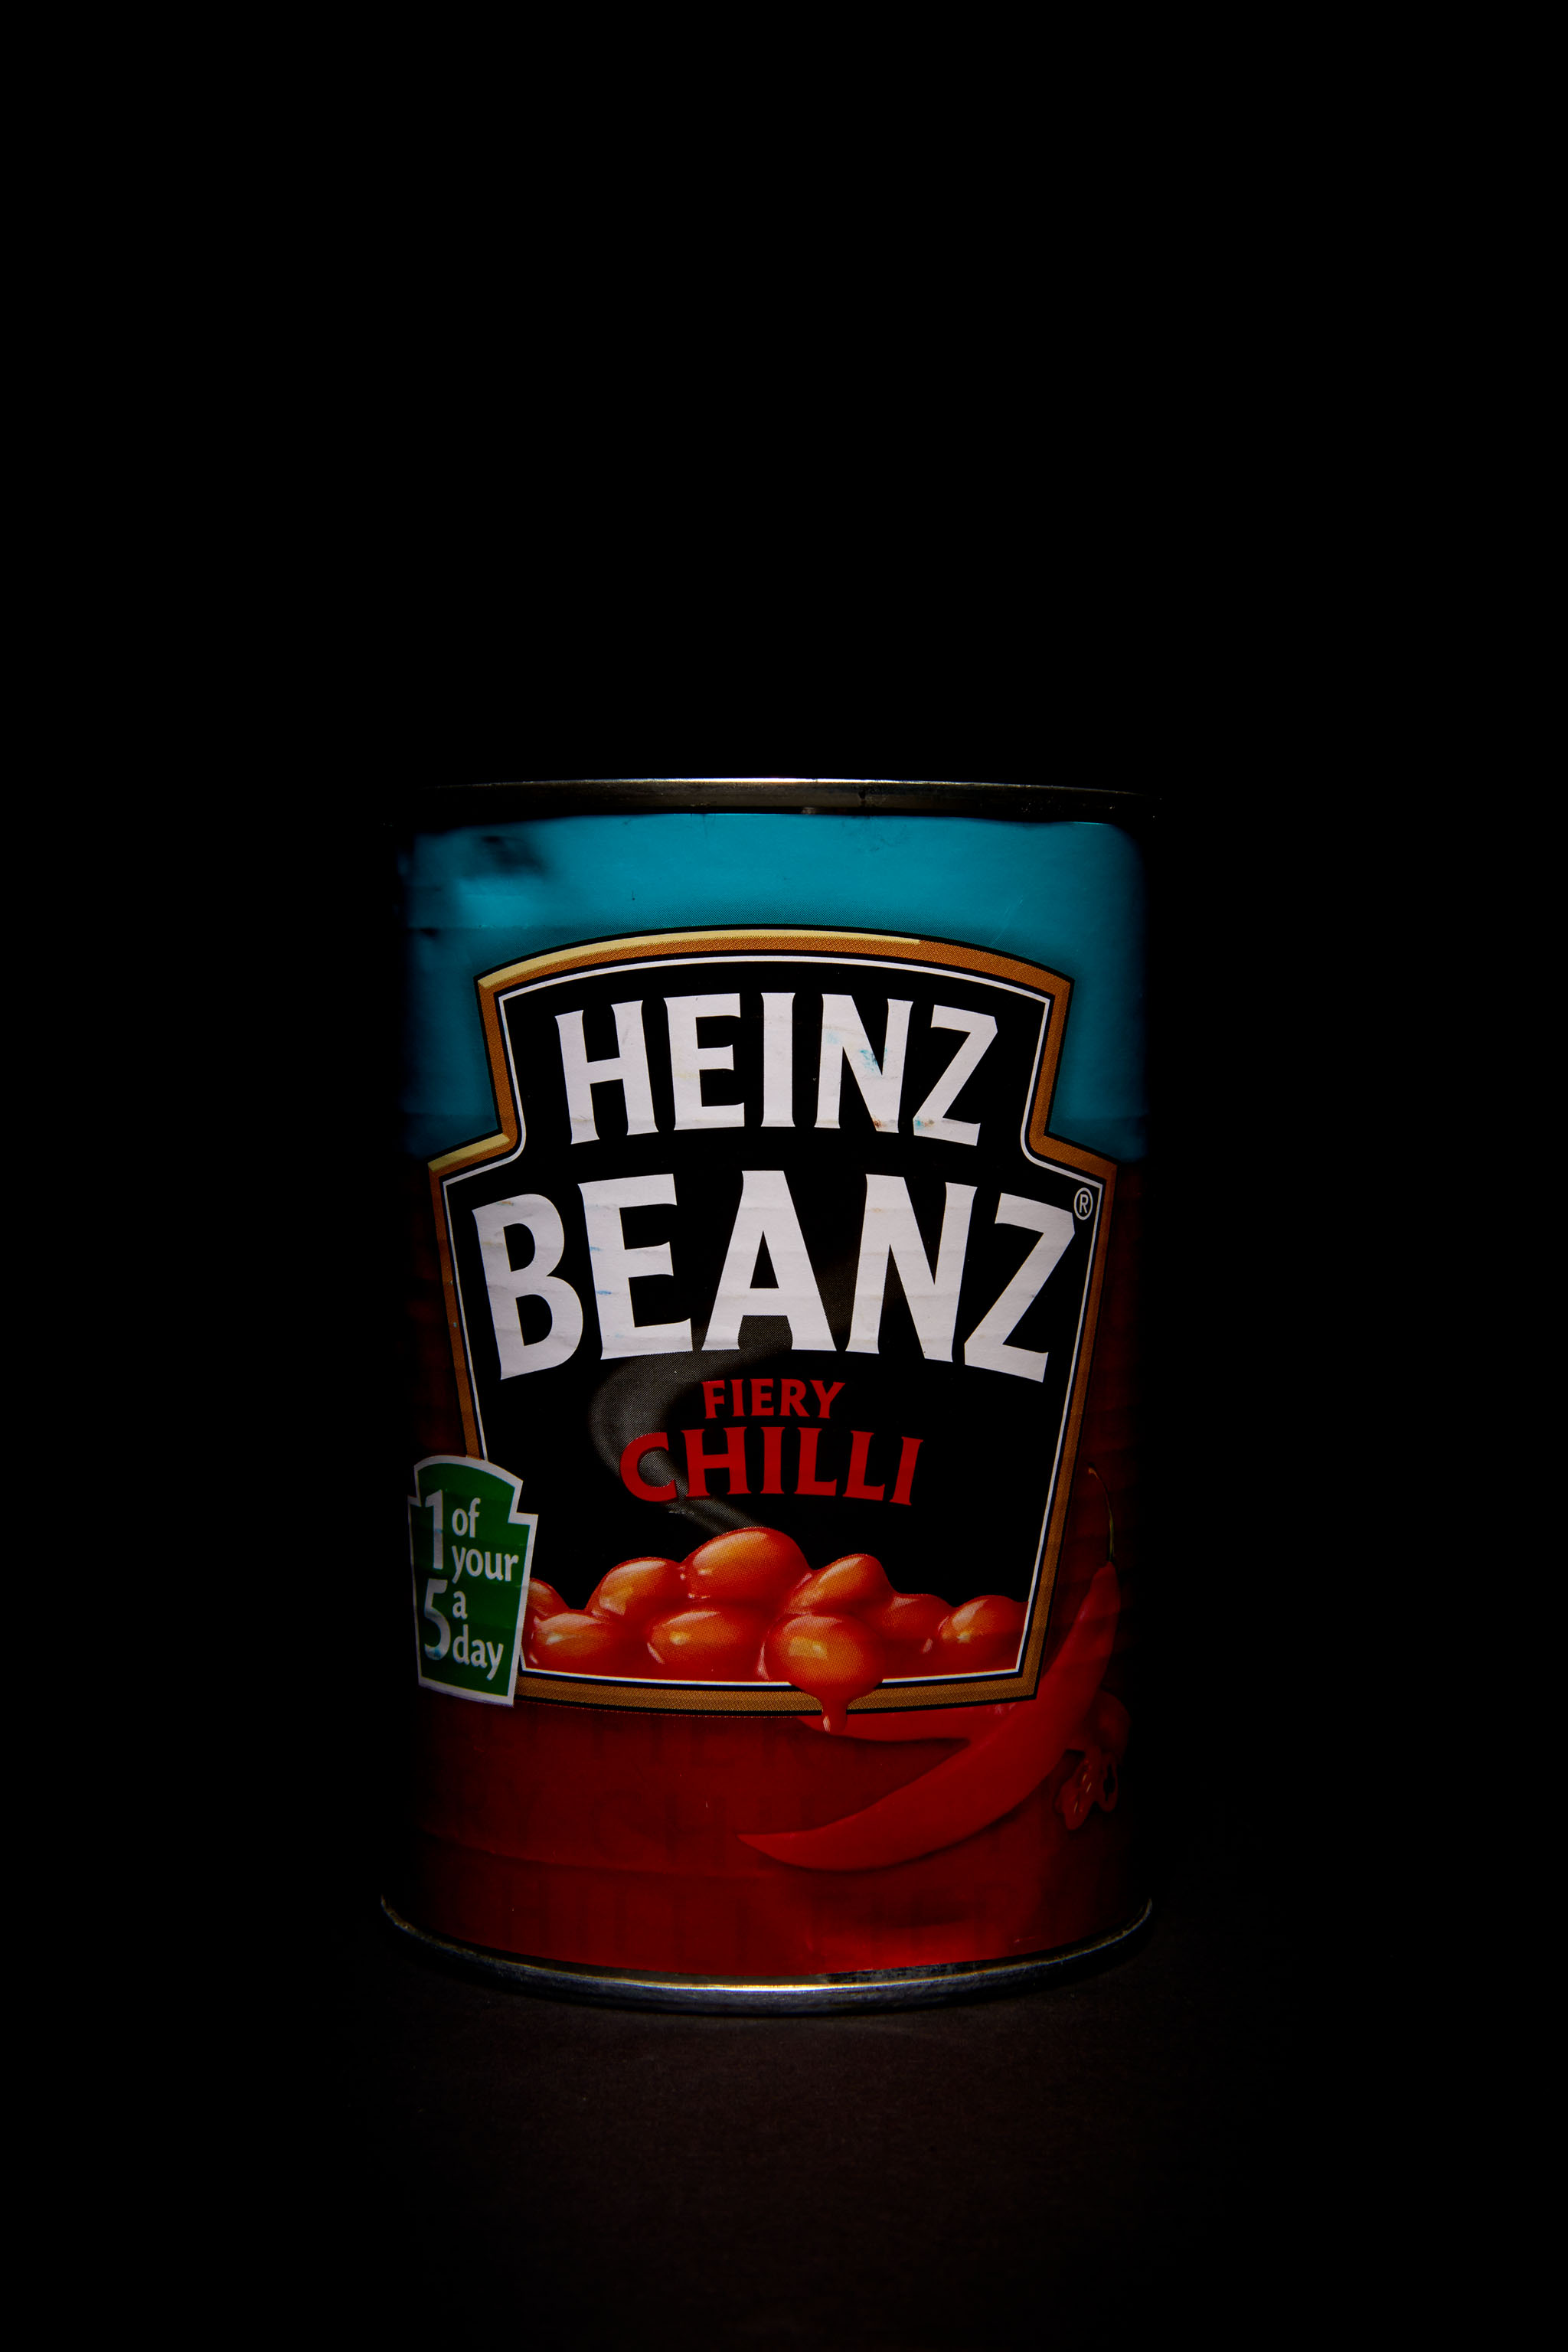 Heinz / Personal work